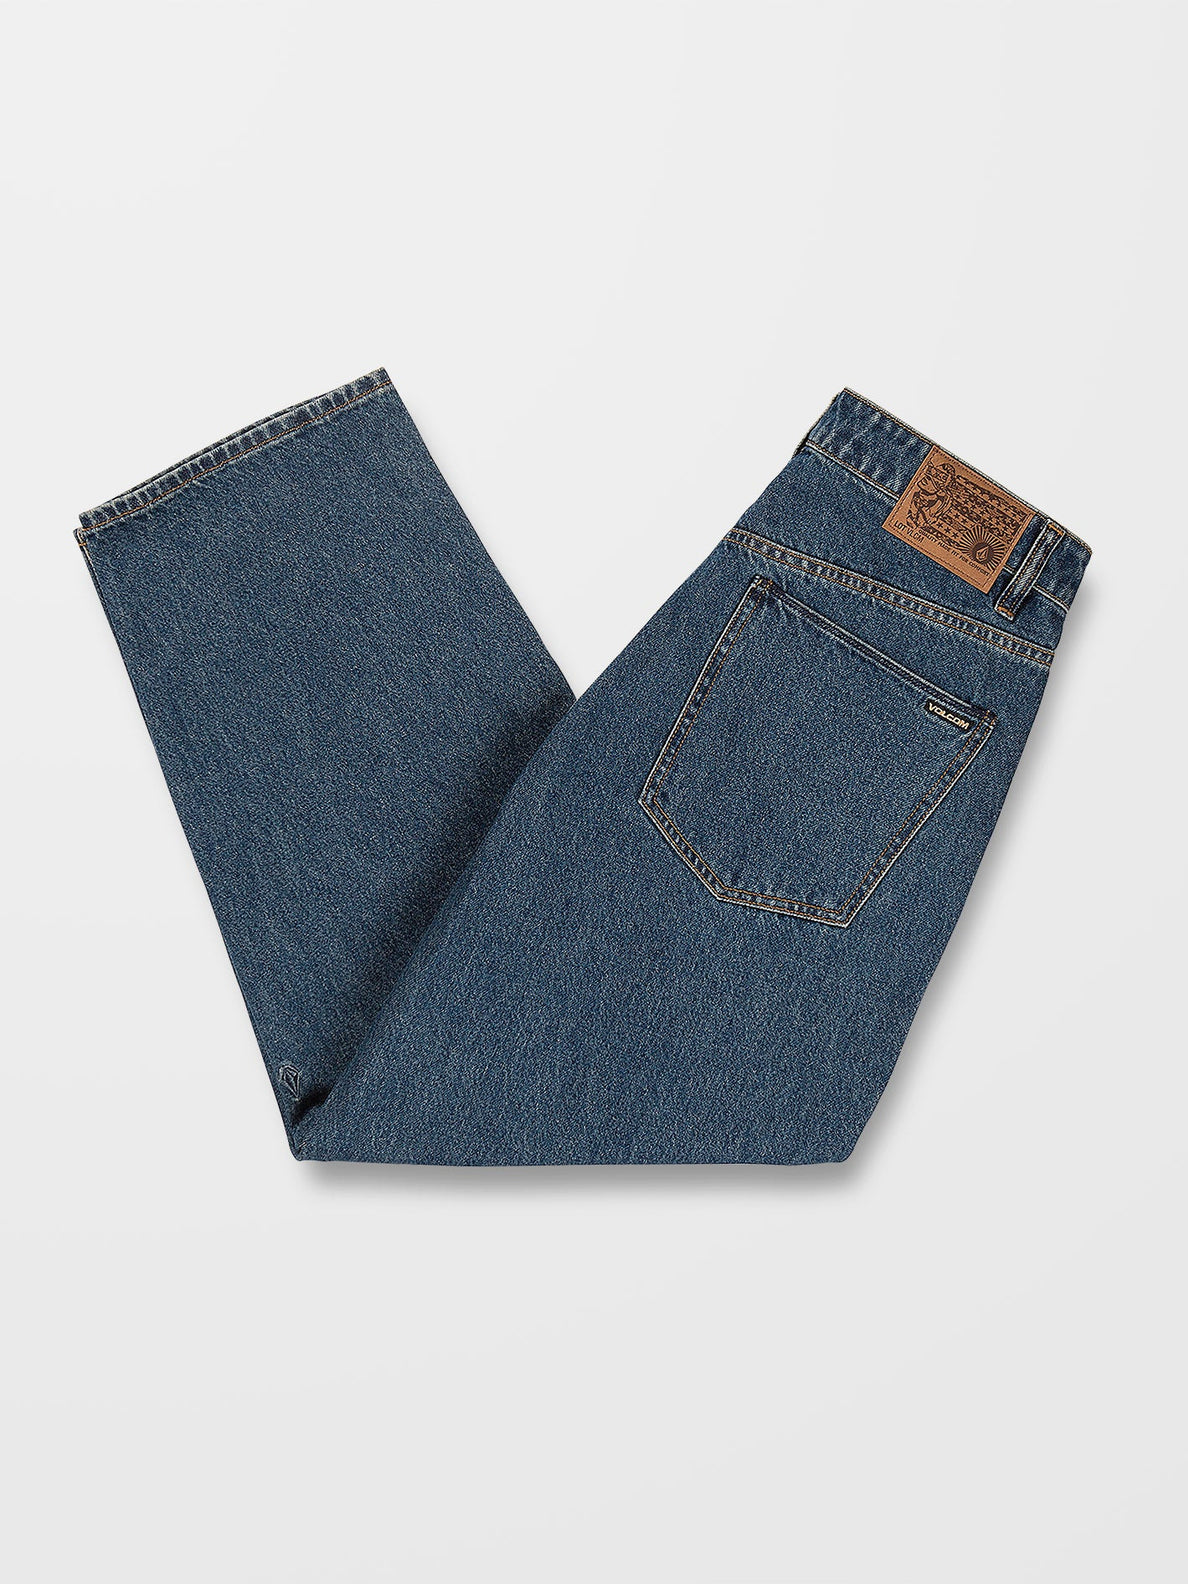 Billow Tapered Jeans - INDIGO RIDGE WASH (A1912301_IRW) [2]